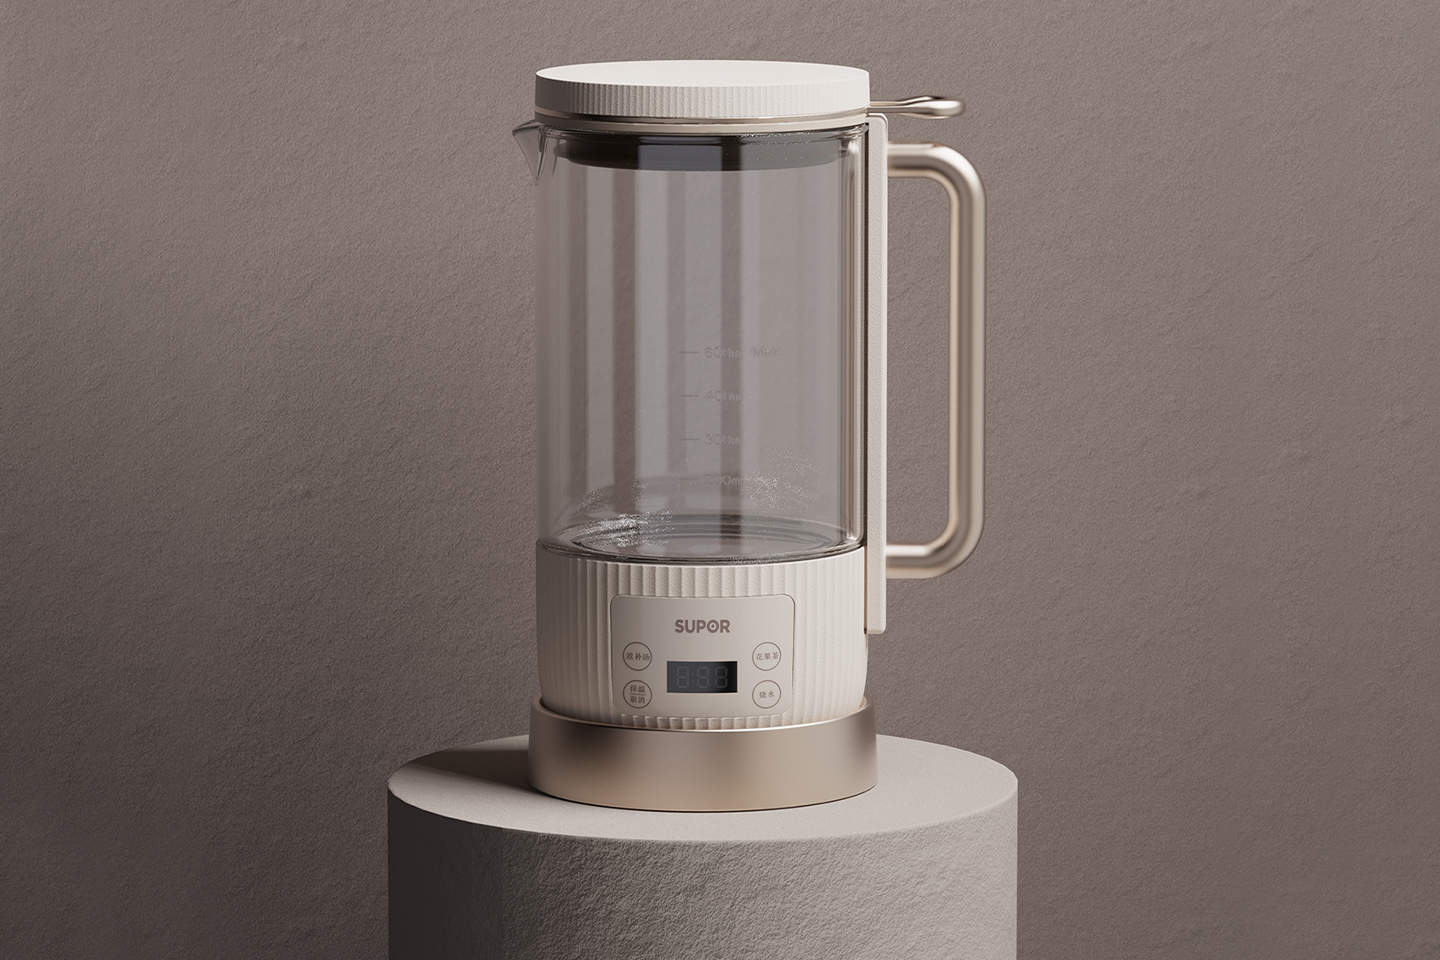 https://www.yankodesign.com/images/design_news/2021/10/340917/minimal_electric_kettle-1.jpg